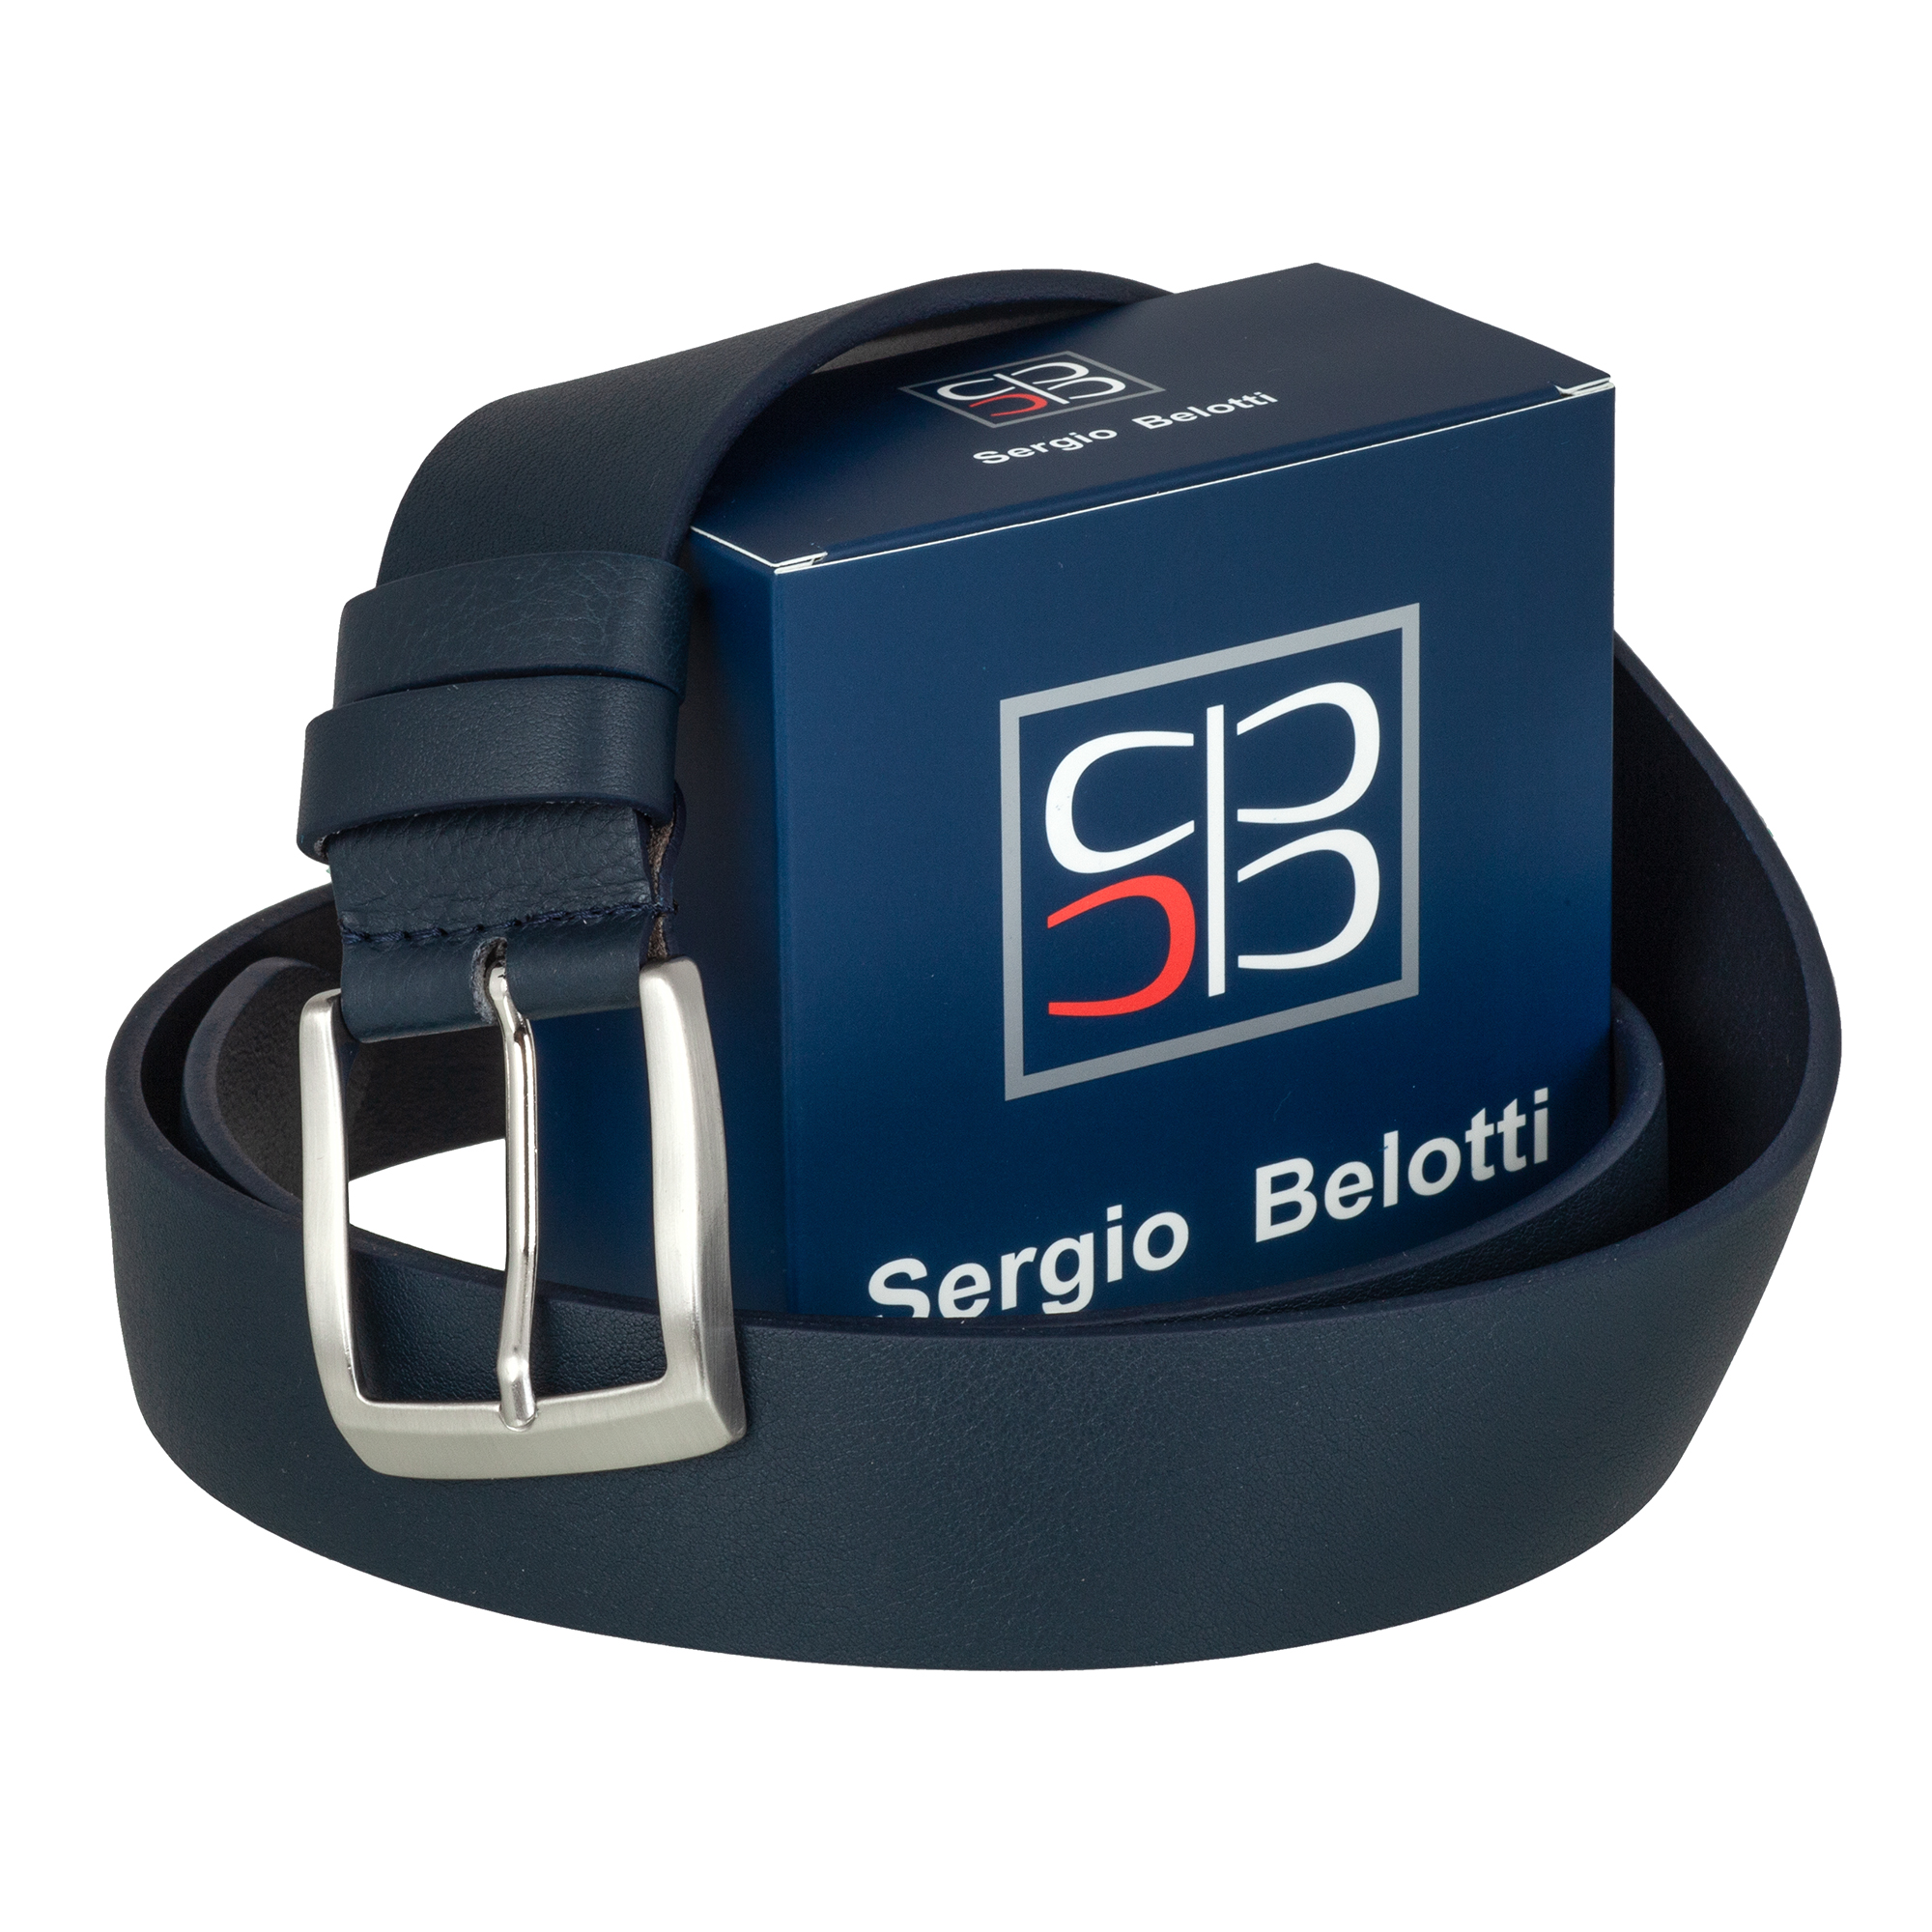 Ремень
Sergio Belotti
2032/40 Navy Ремни и пояса